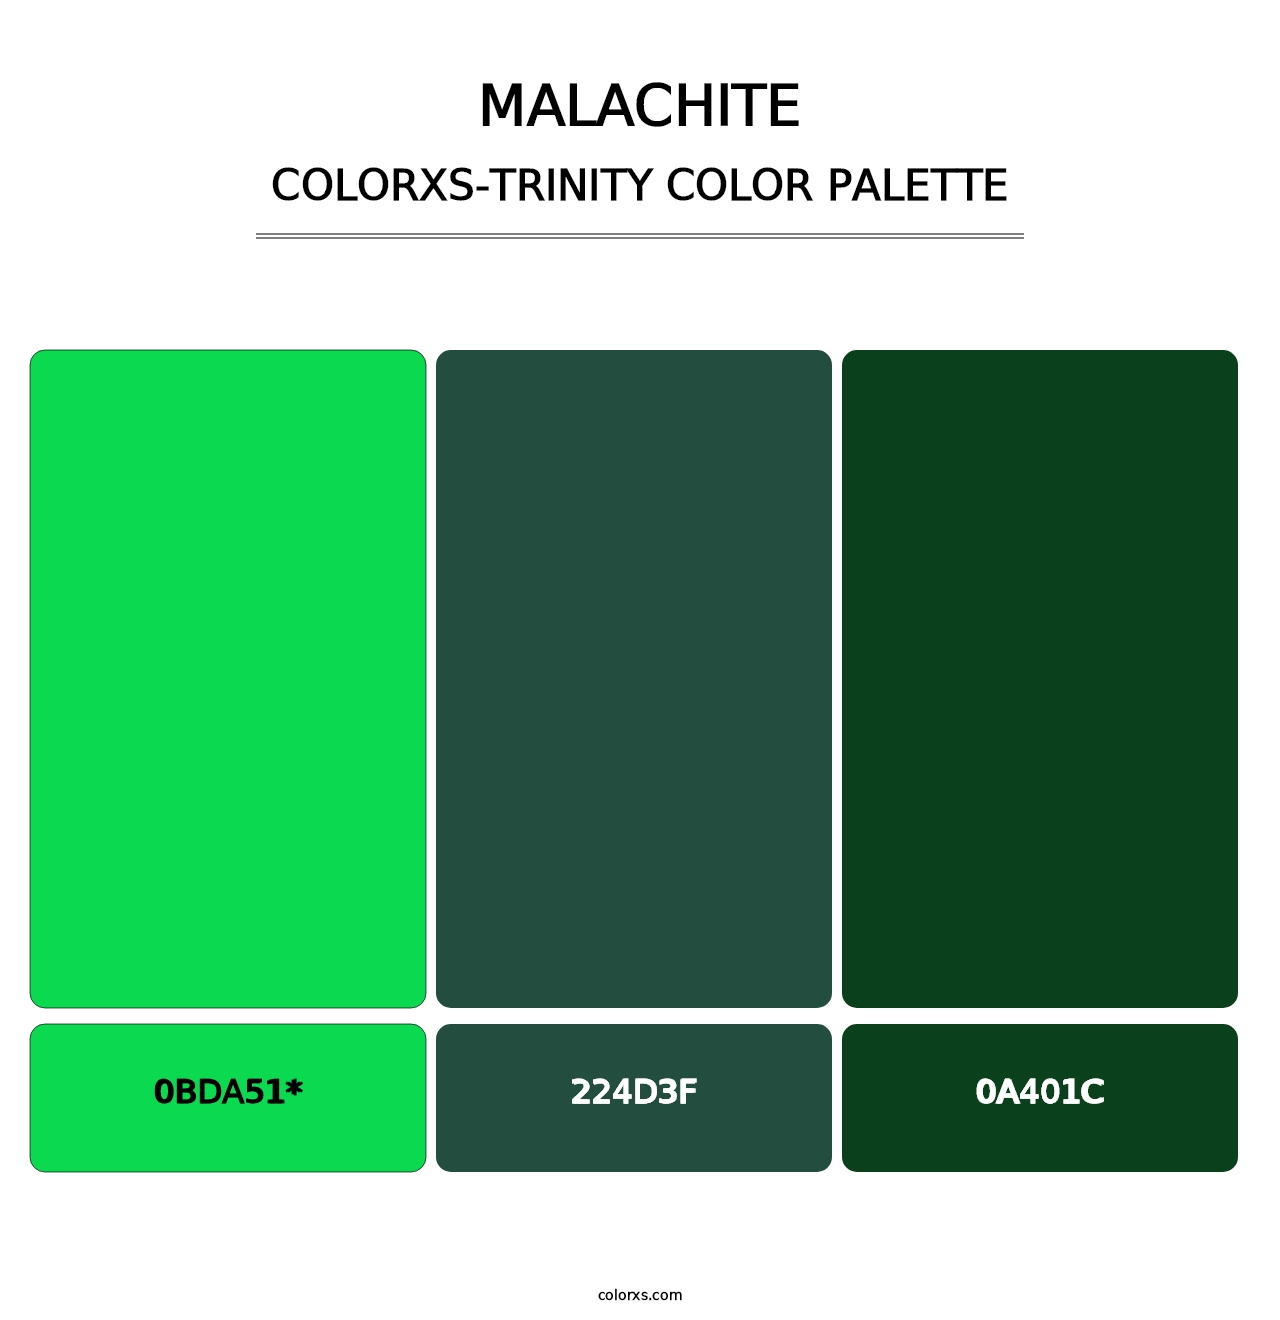 Malachite - Colorxs Trinity Palette